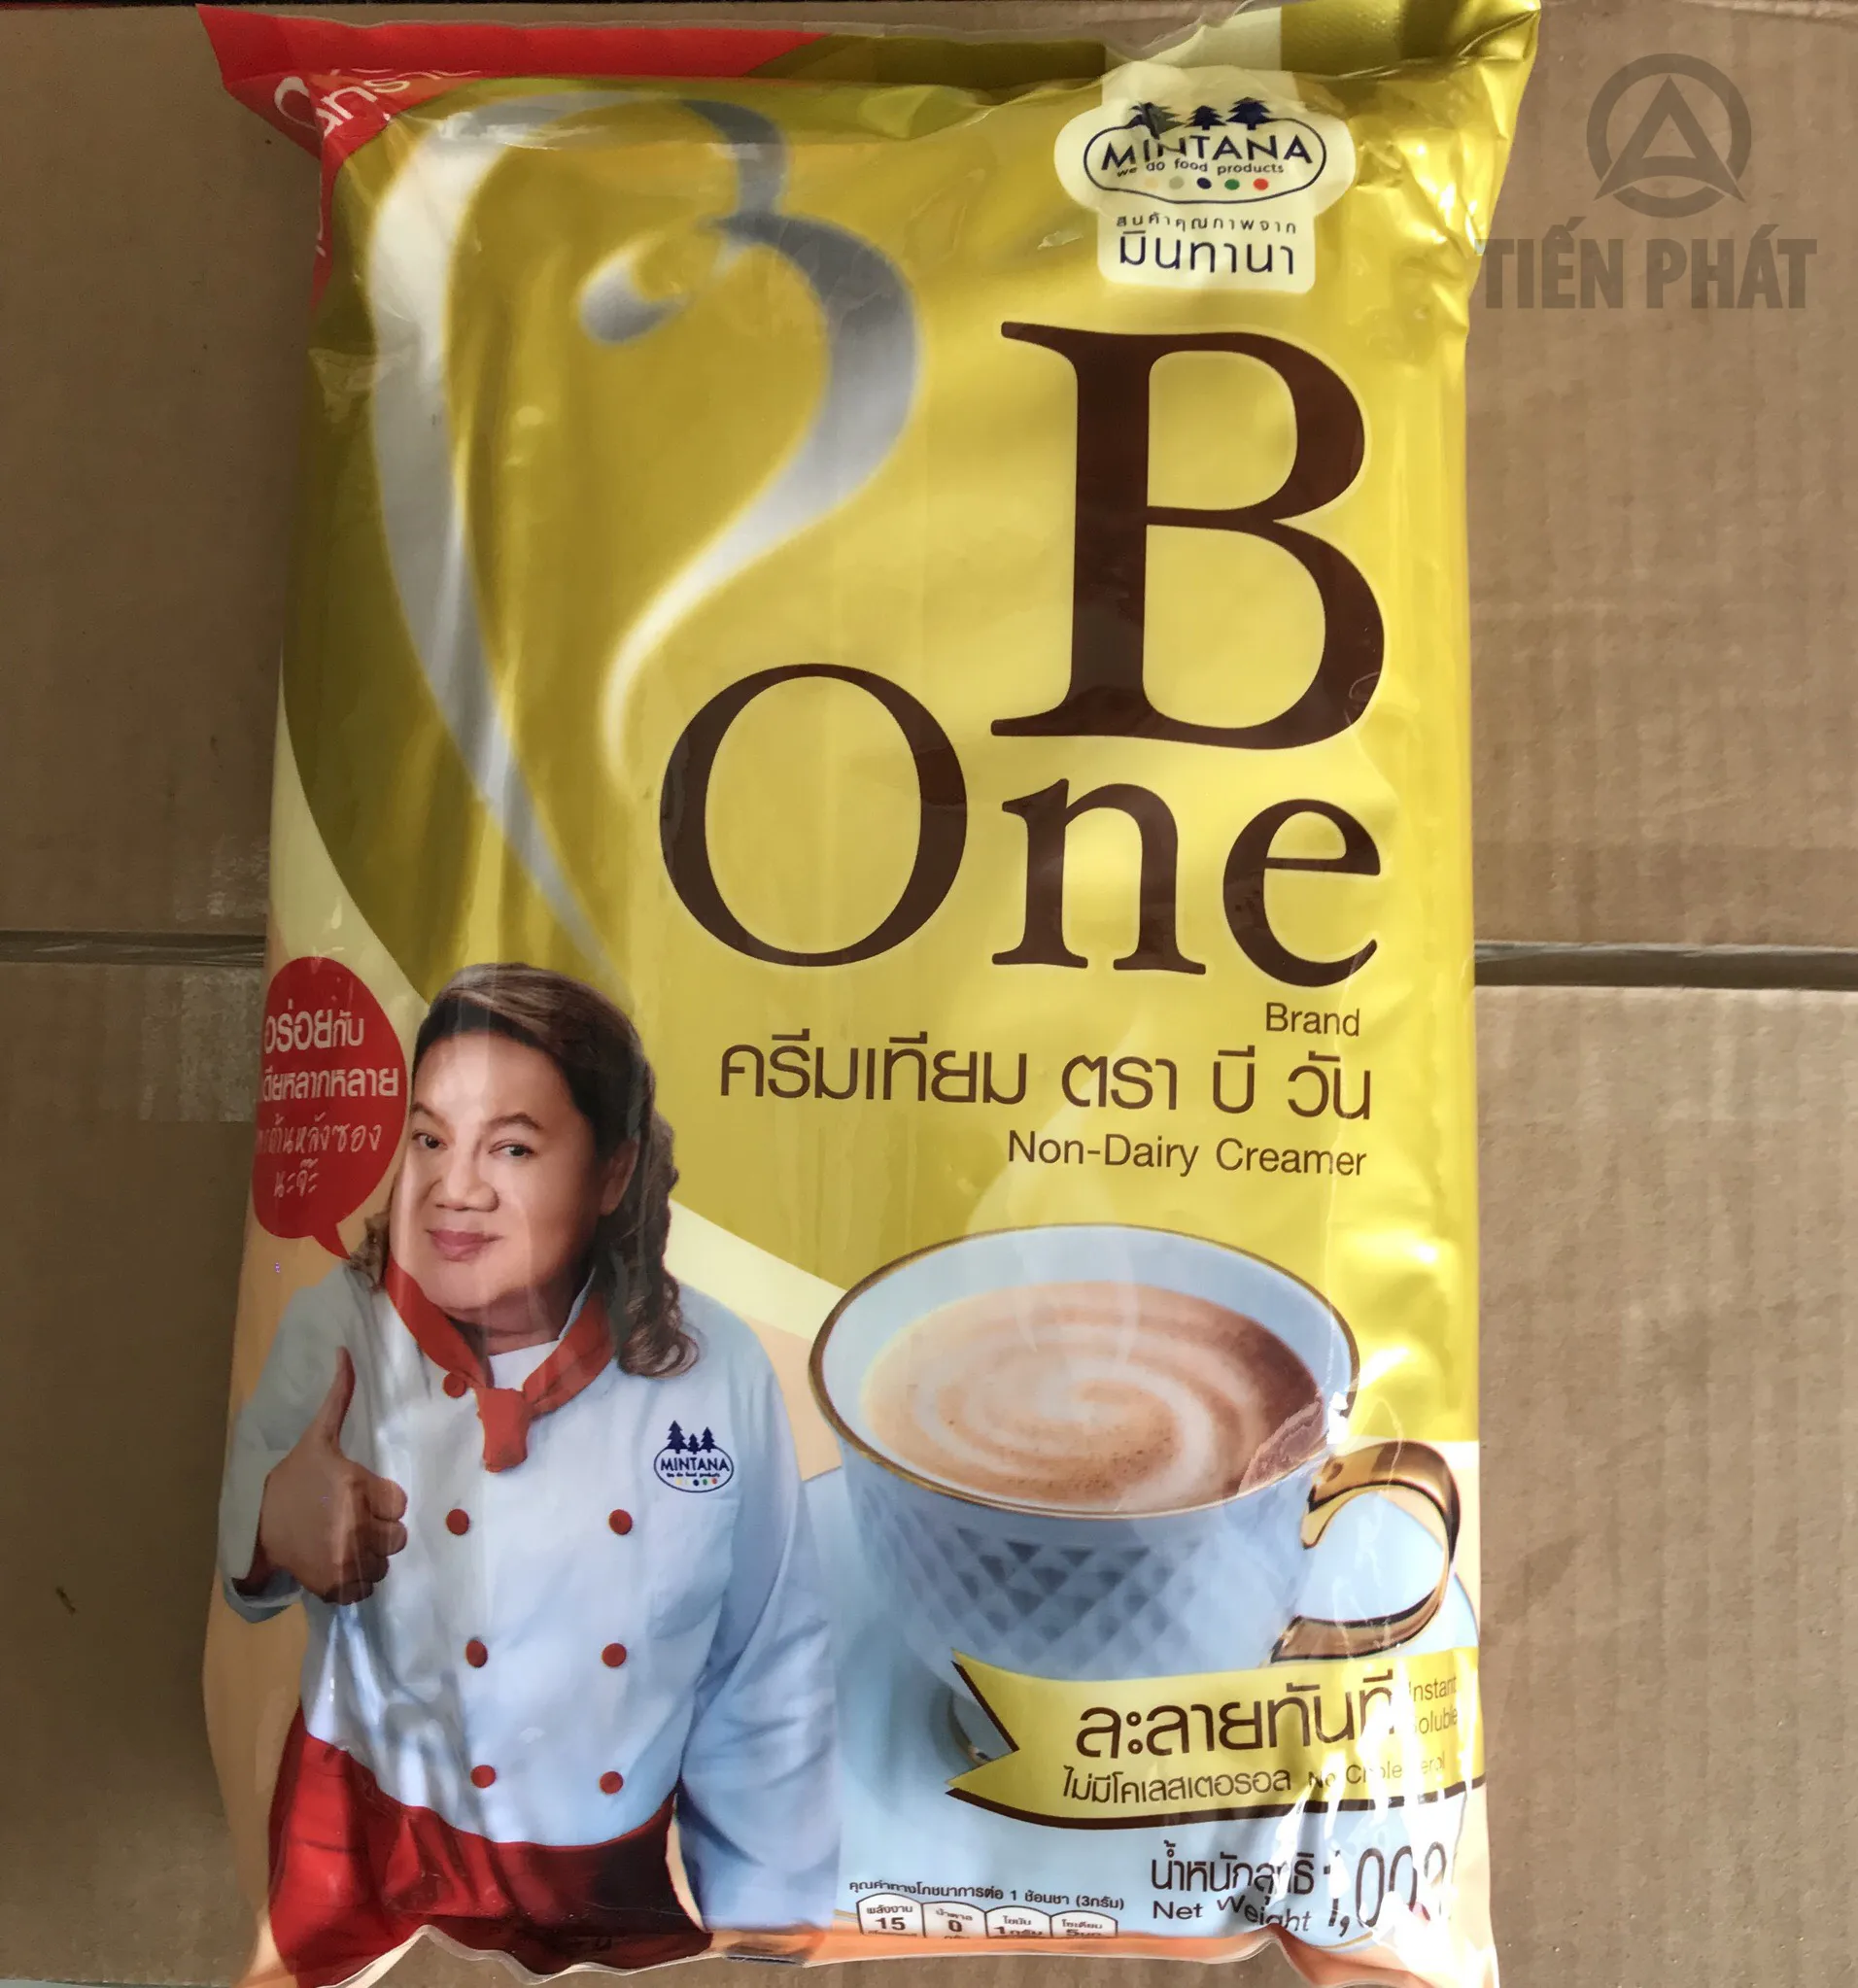 Bột Sữa Kem Béo B-one Thái Lan